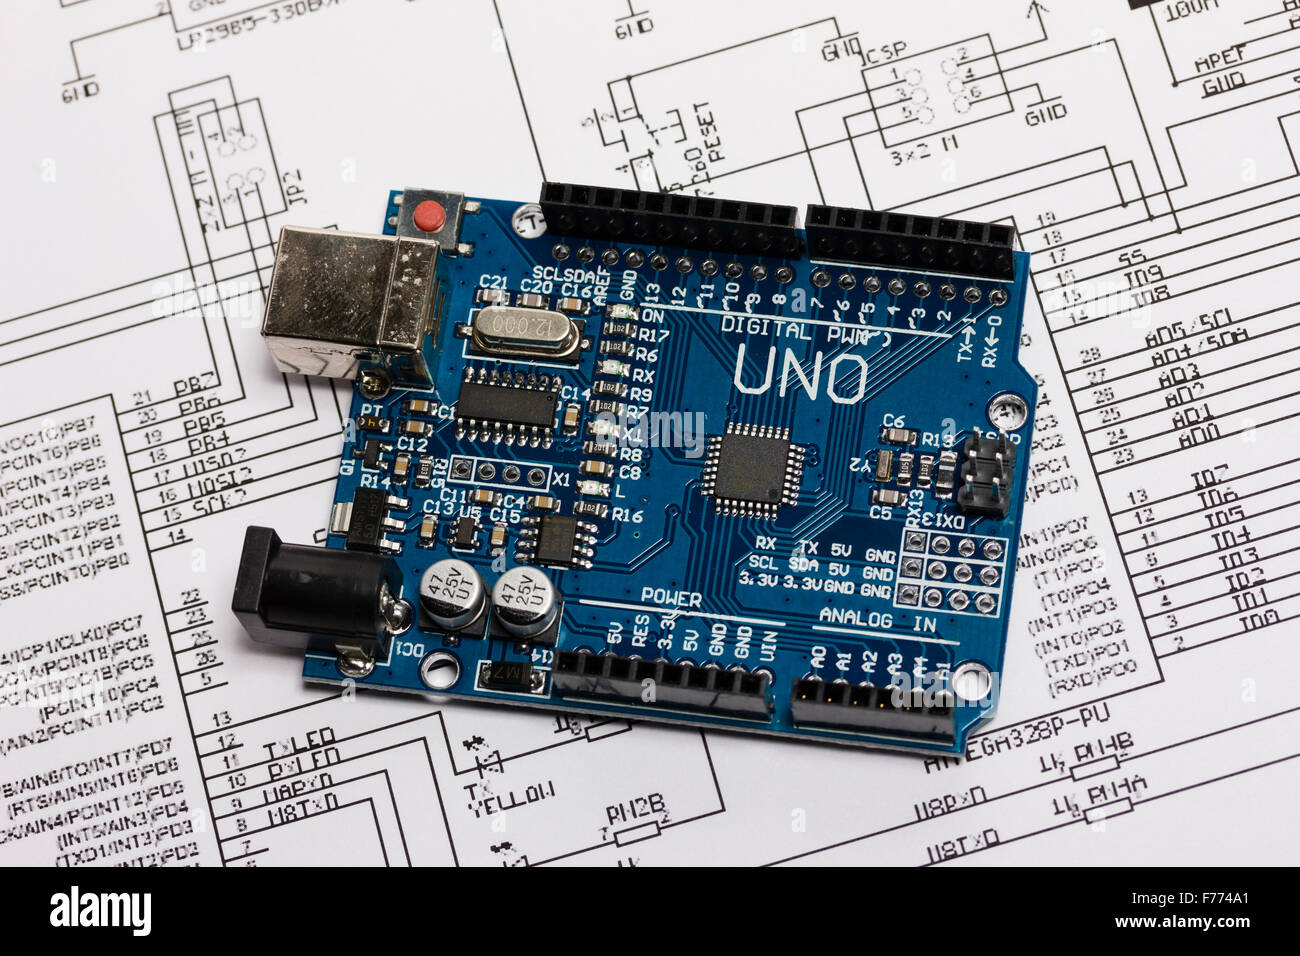 Arduino Uno microcontroller board Stock Photo